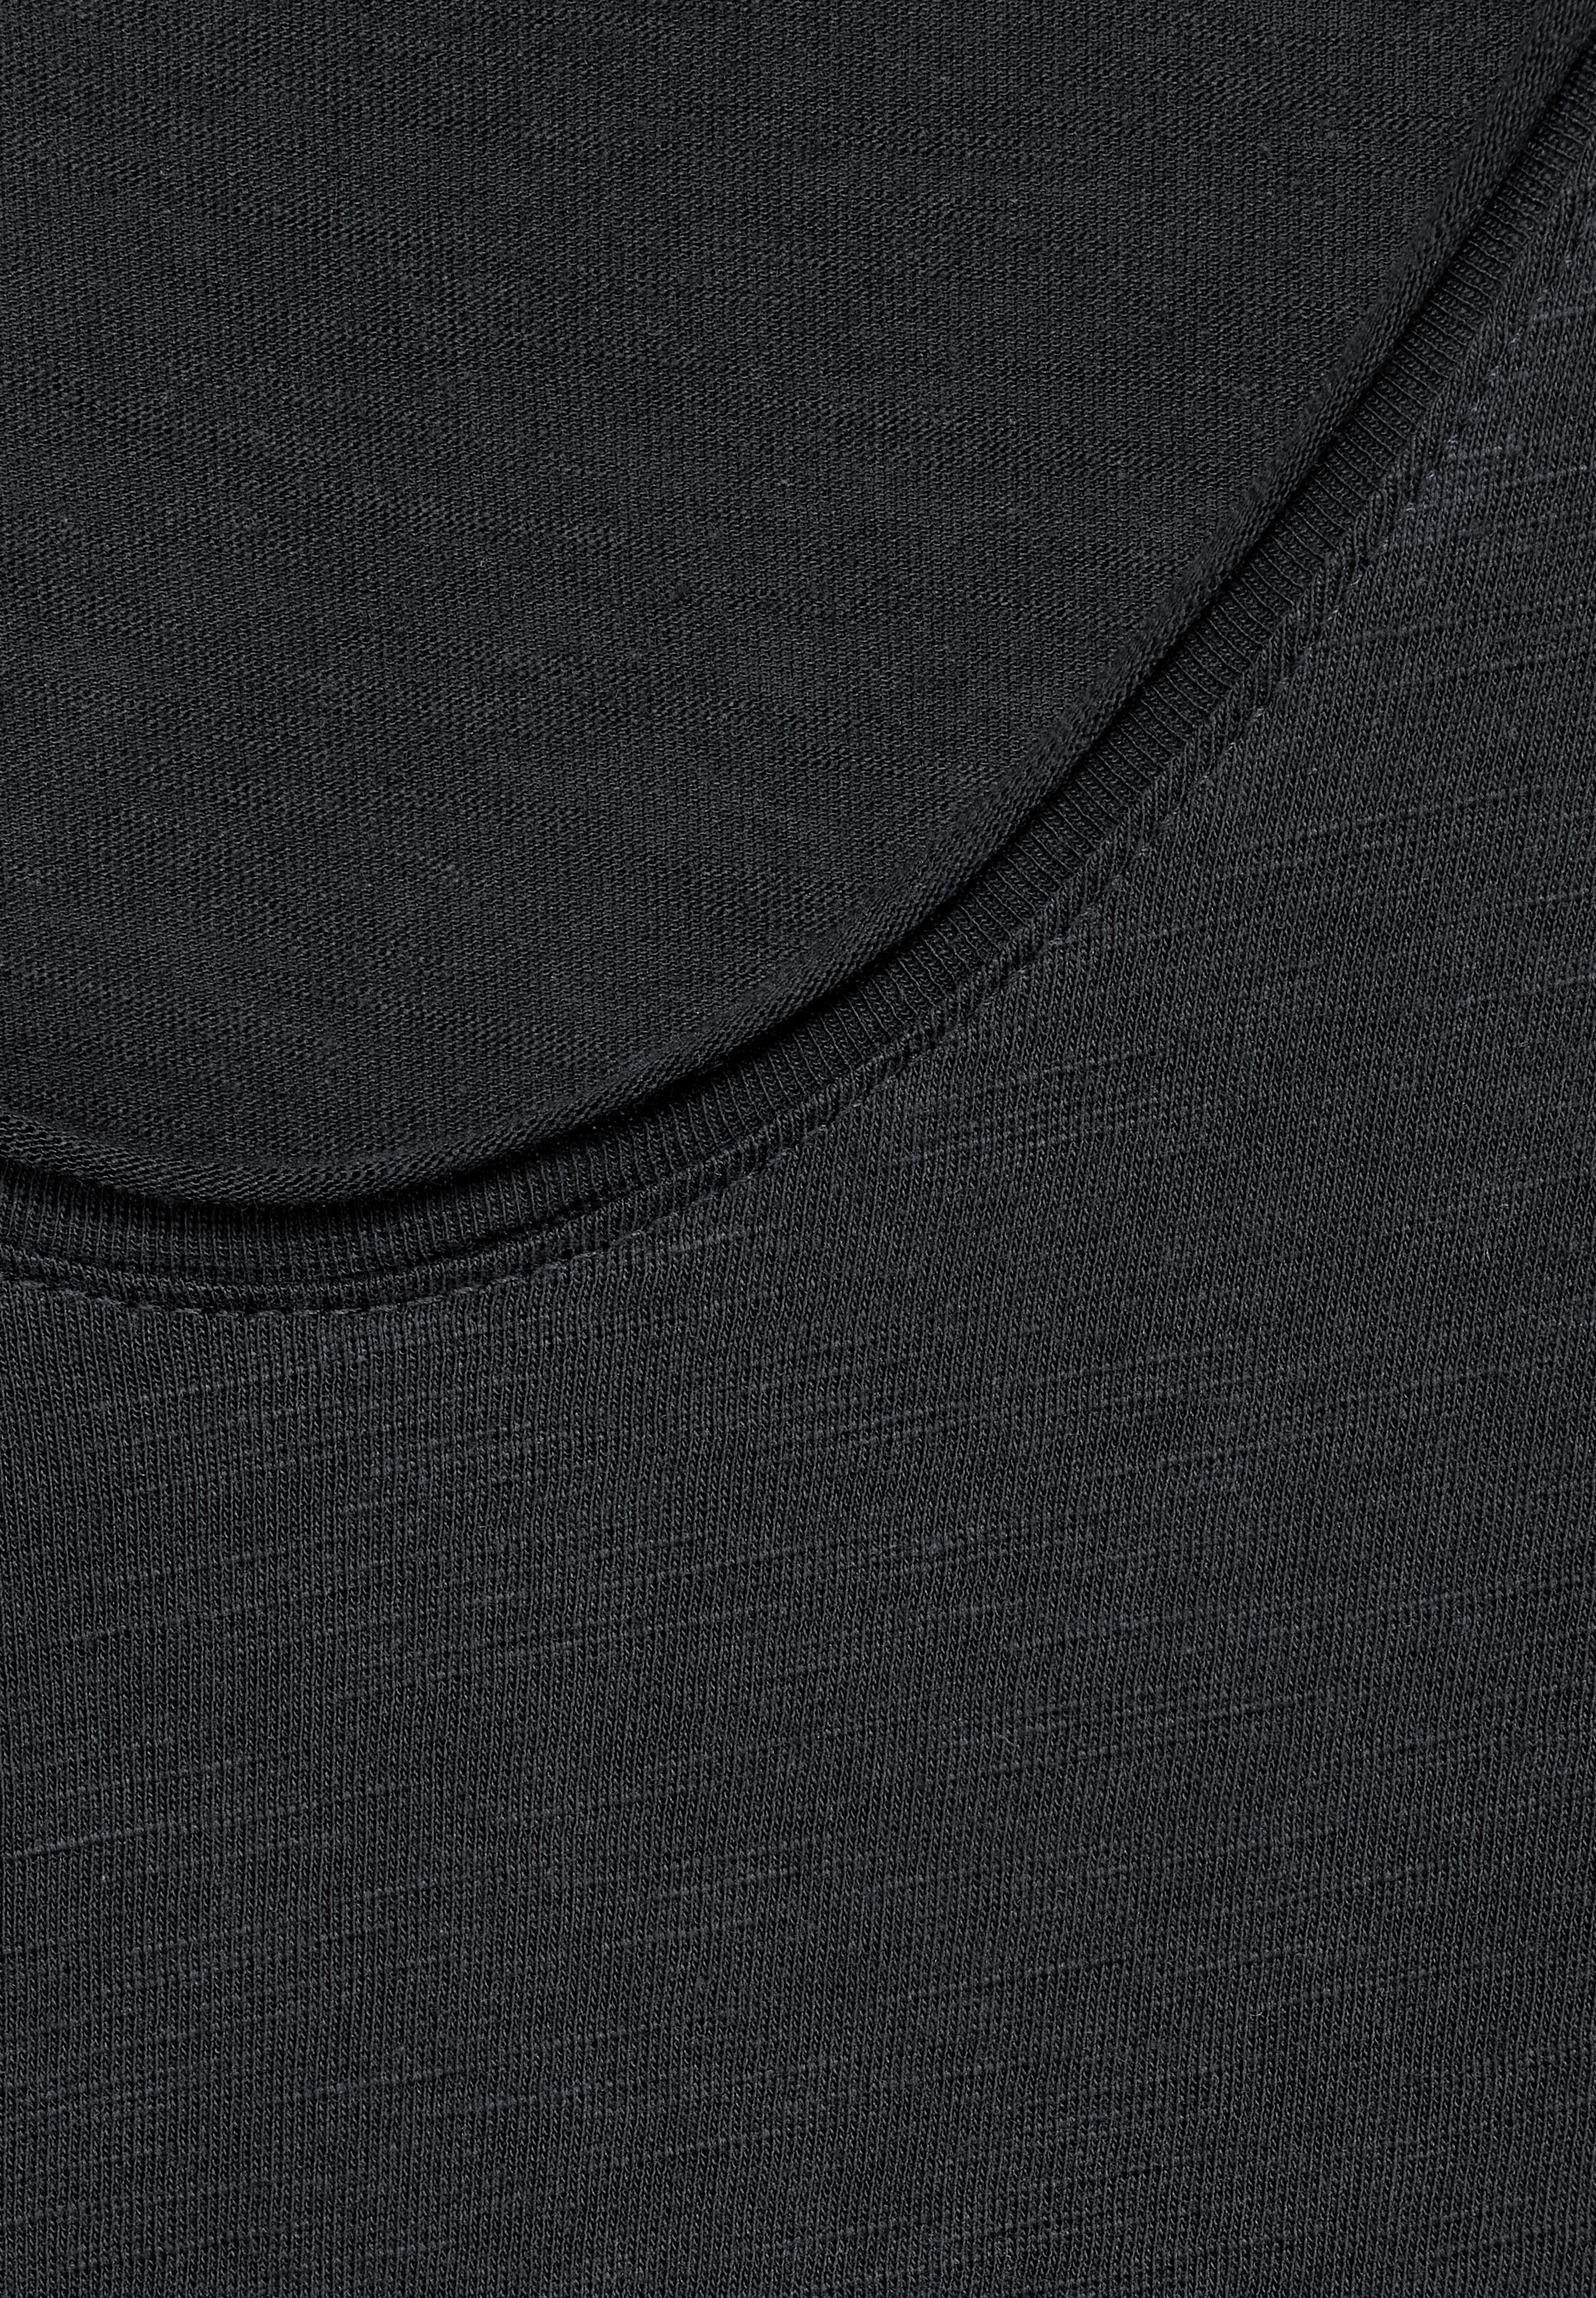 CECIL T-Shirt in Carbon Grey im SALE reduziert B317596-12538 - CONCEPT Mode